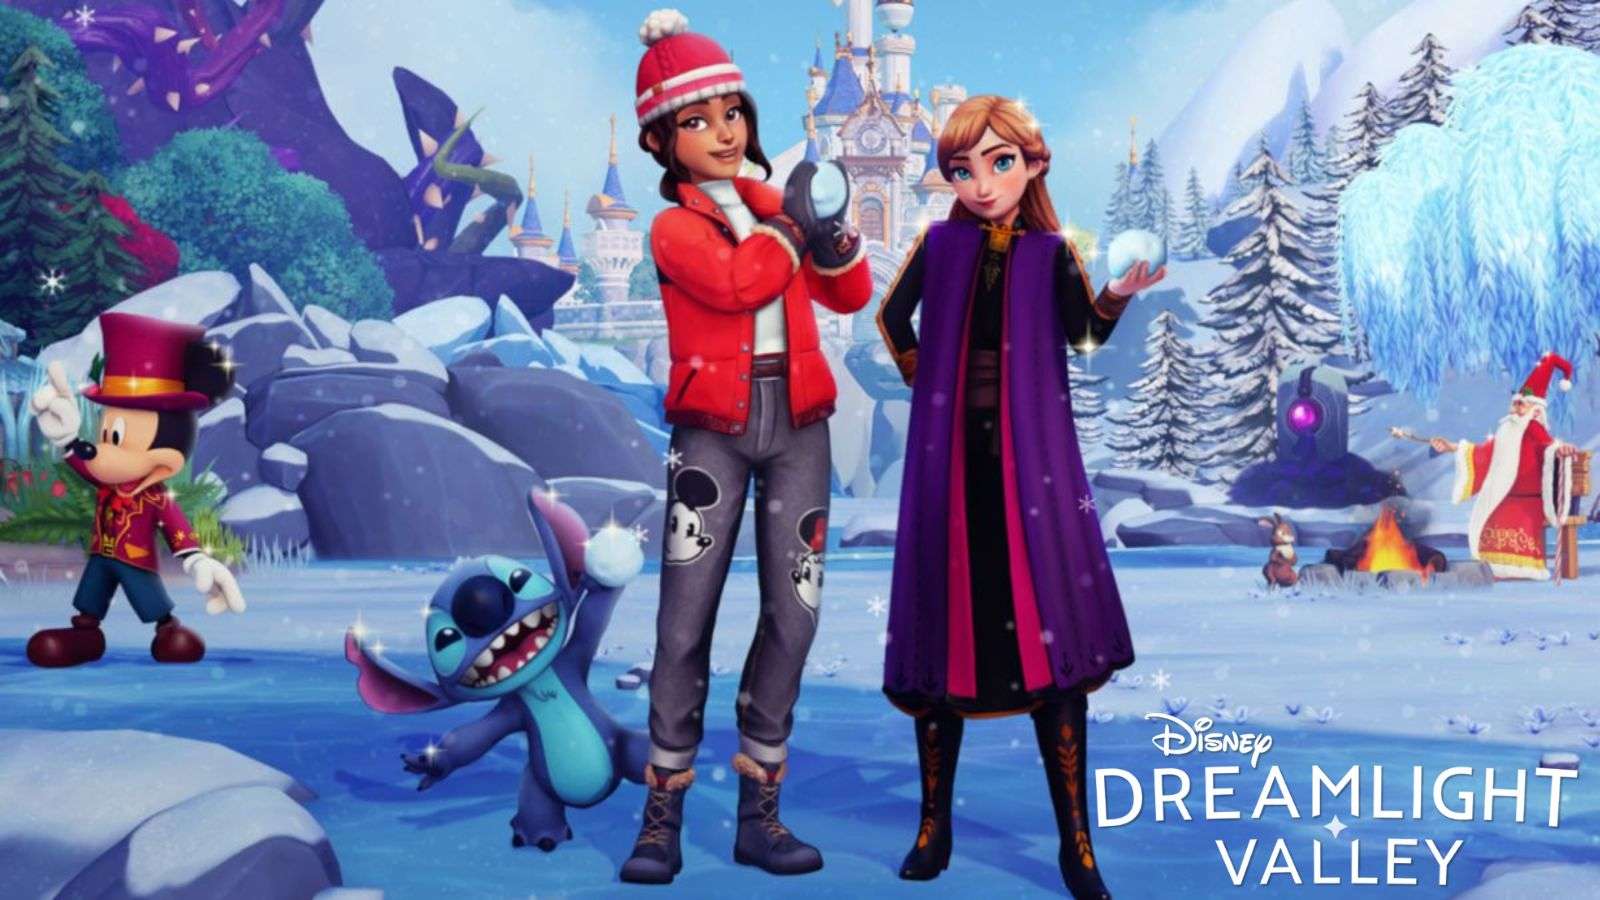 Disney Dreamlight Valley stitch quest not working